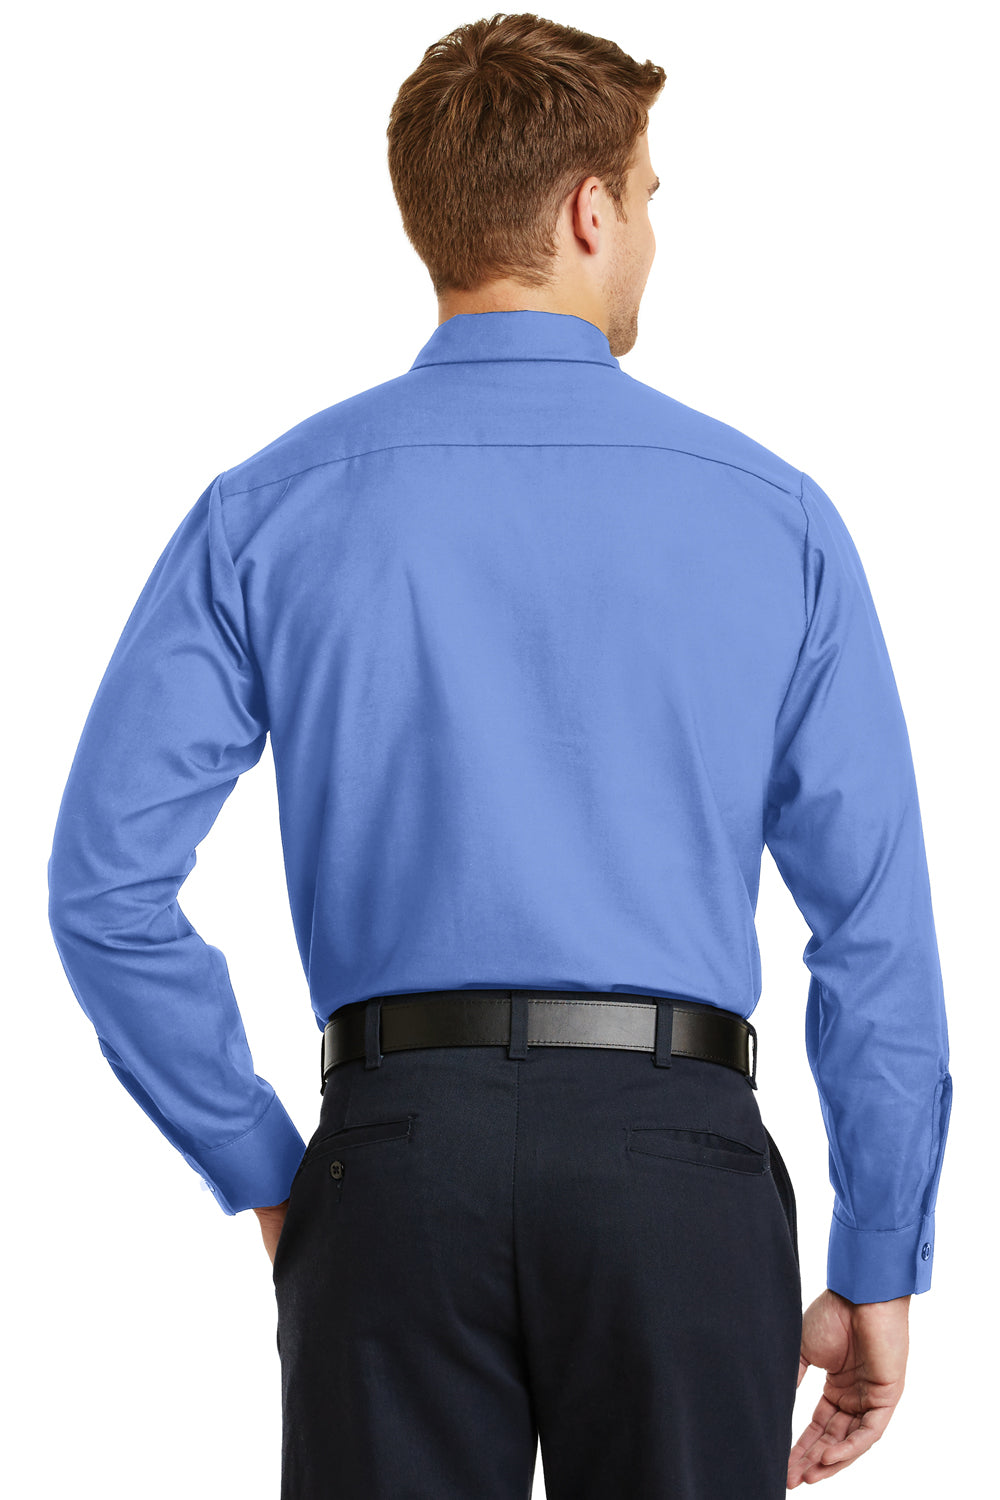 Red Kap SP14 Mens Industrial Moisture Wicking Long Sleeve Button Down Shirt w/ Double Pockets Petrol Blue Back